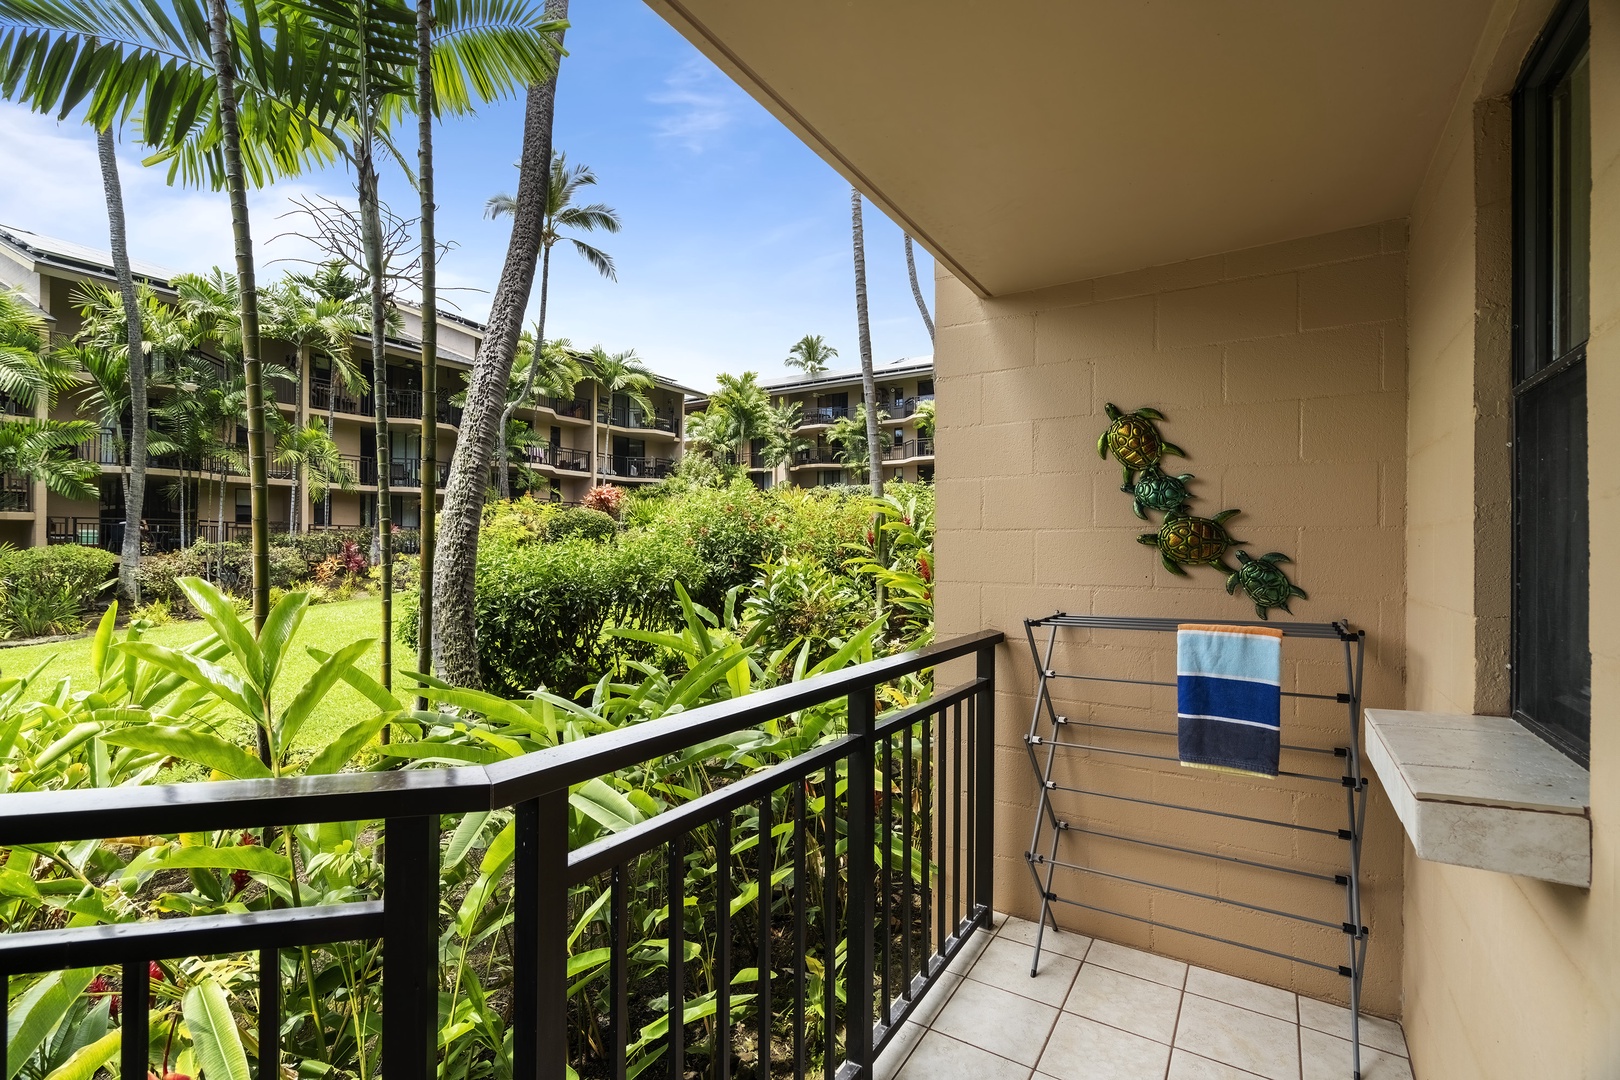 Kailua Kona Vacation Rentals, Kona Makai 3102 - A perfect place to dry your beach towels!